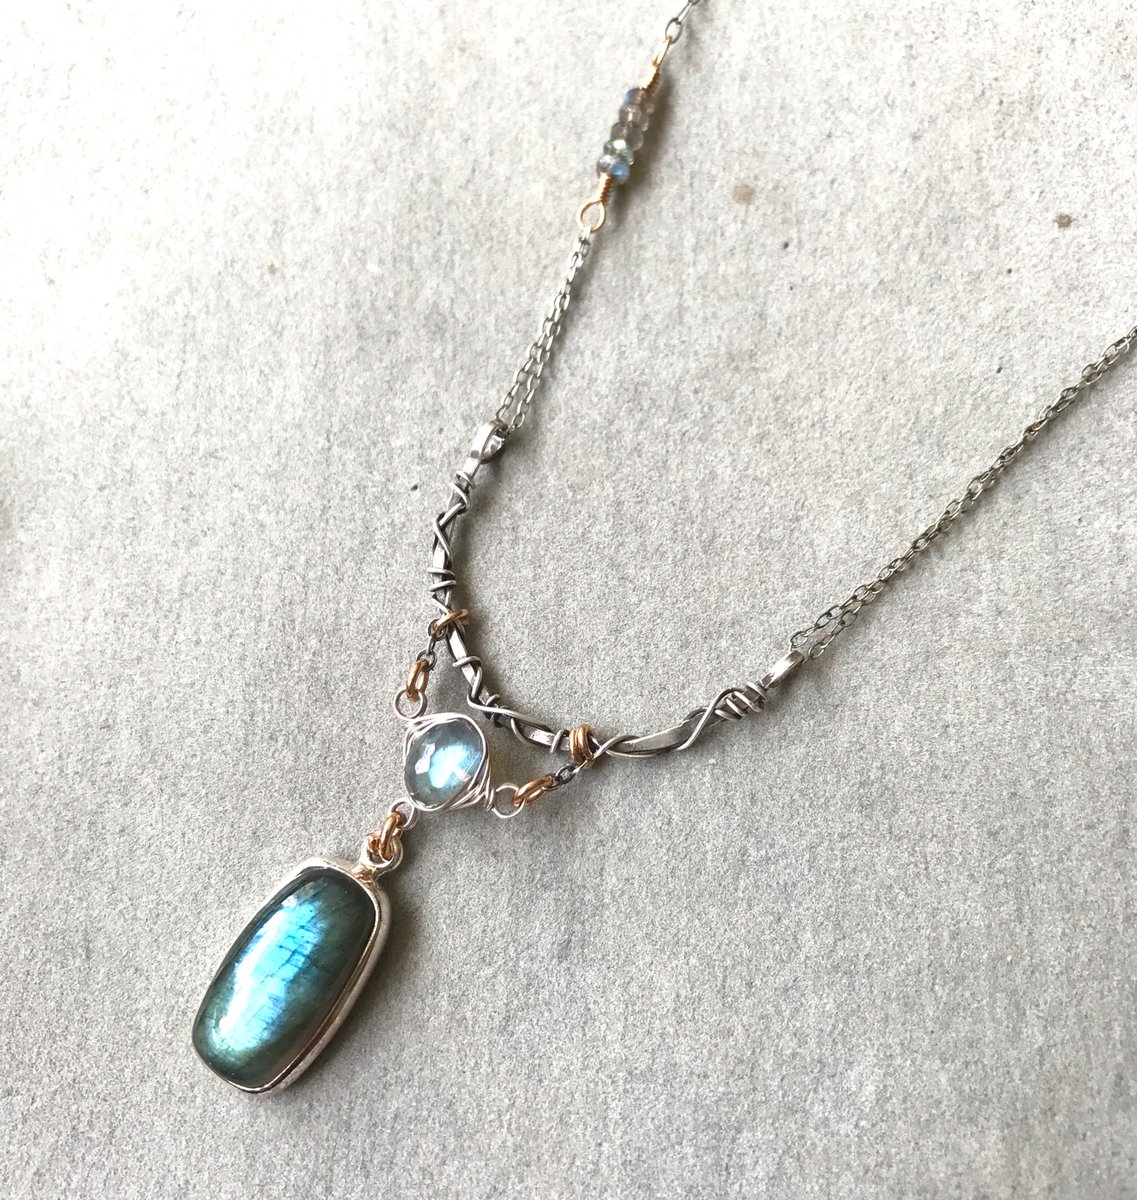 Organic silver bar and Labradorite necklace / Einat Agmon Artisan Jewelry